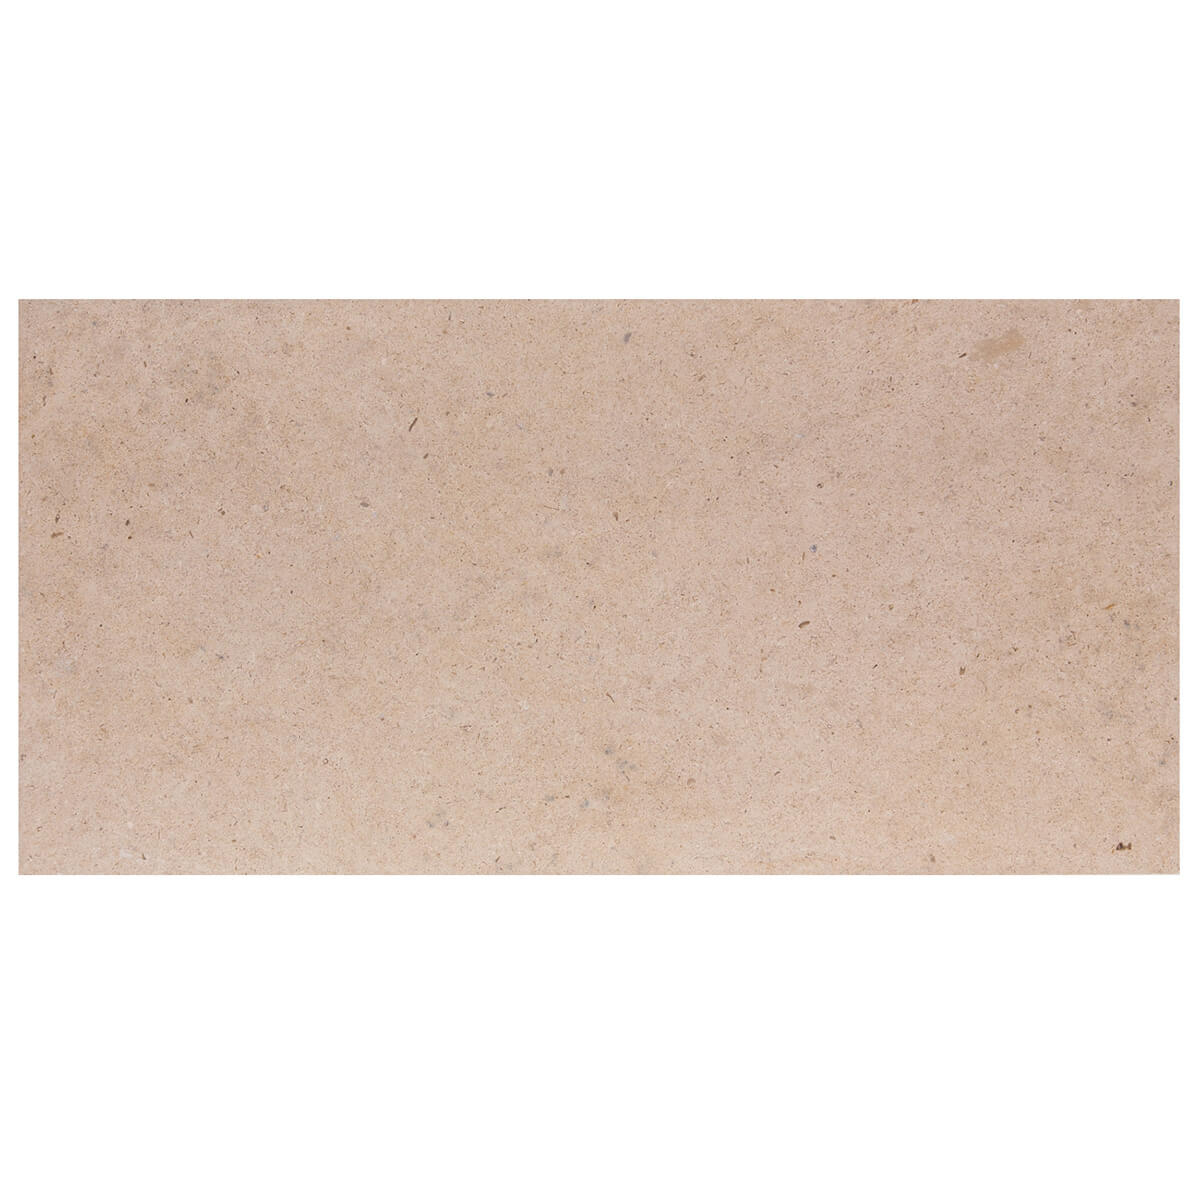 haussmann corton beige limestone rectangle natural stone field tile 12x24 honed